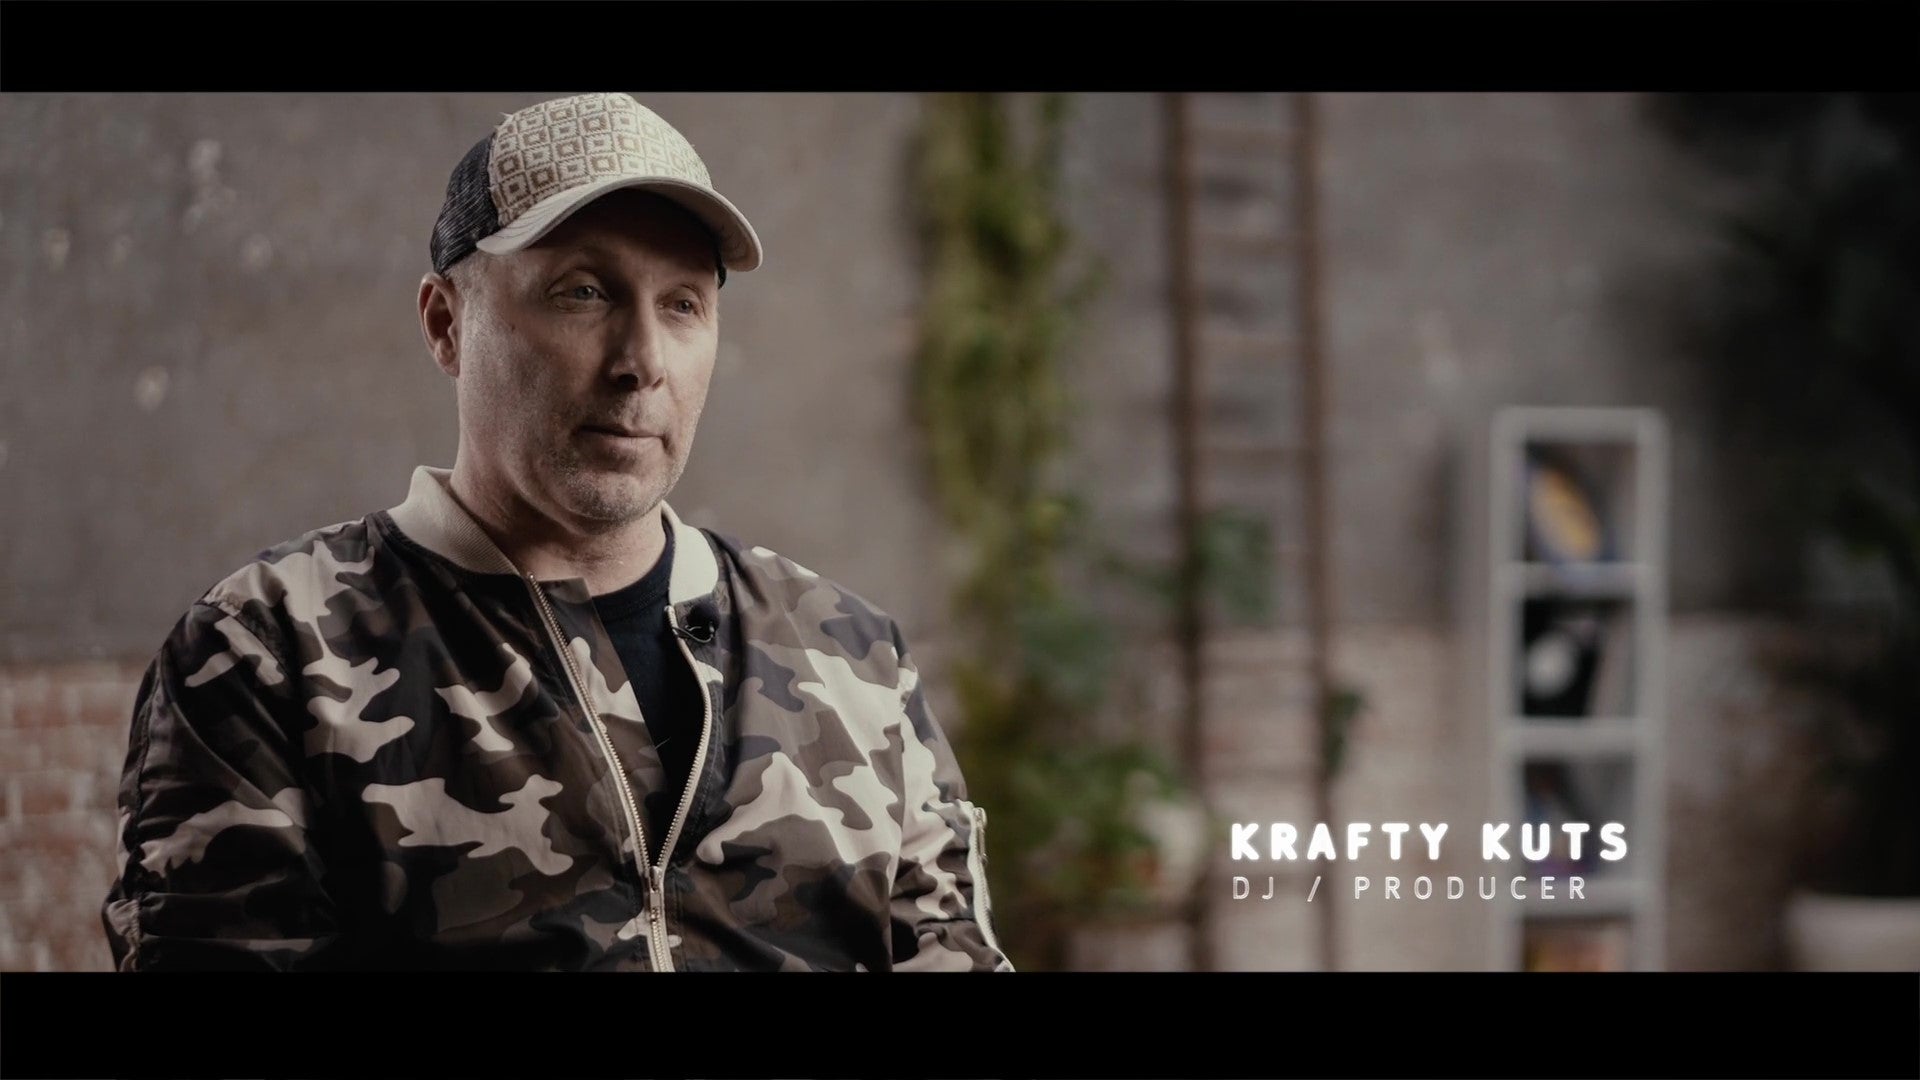 Krafty Kuts DJ/ Producer